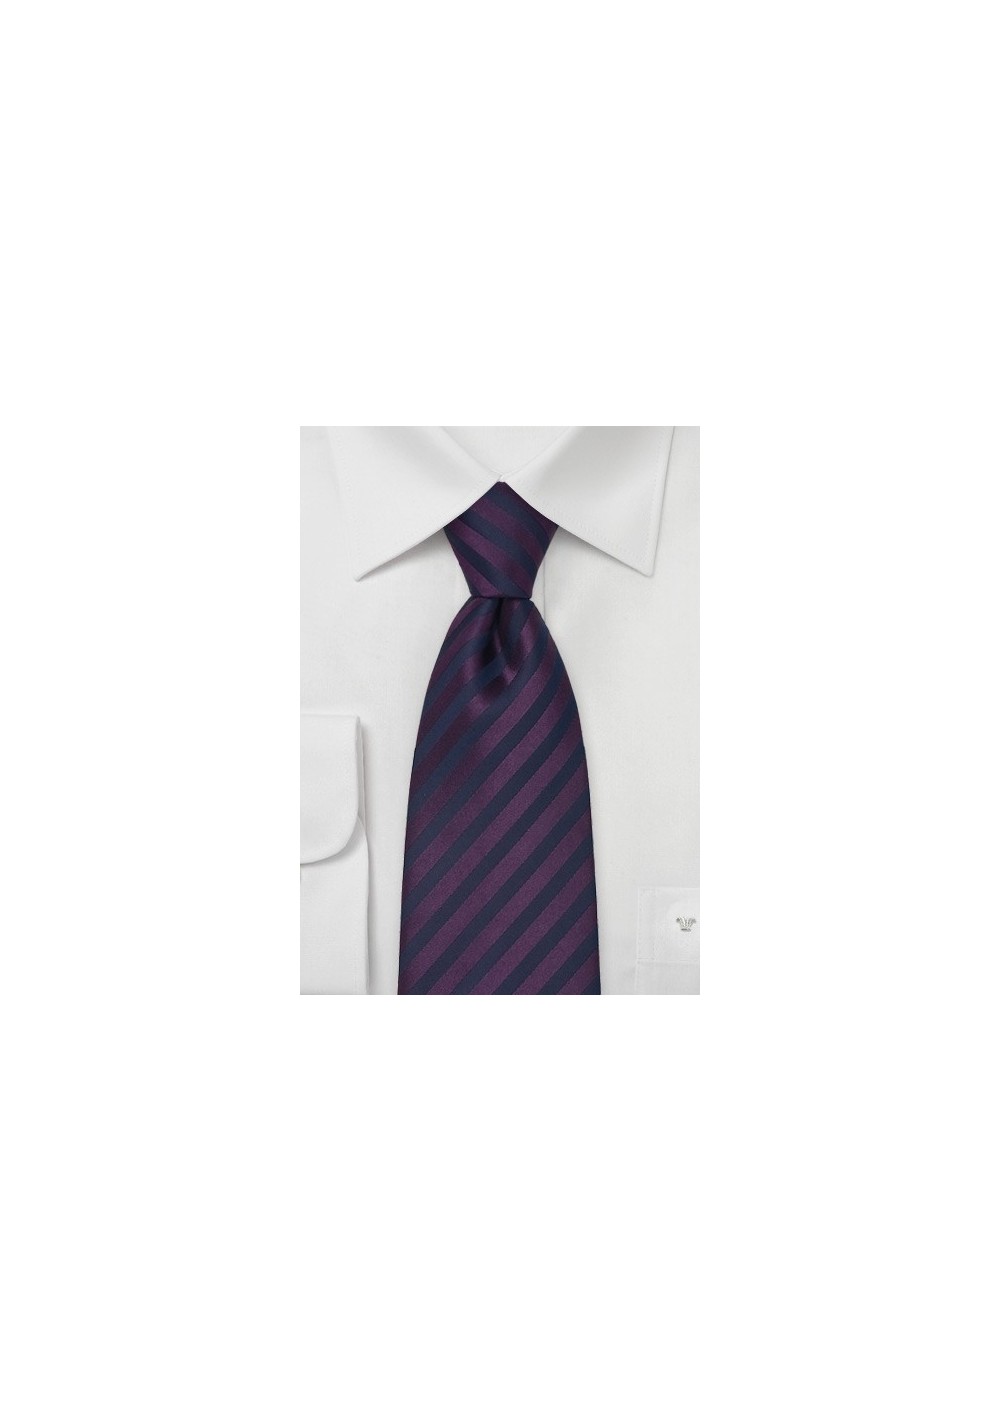 Eggplant Purple Silk Tie in Extra Long Length